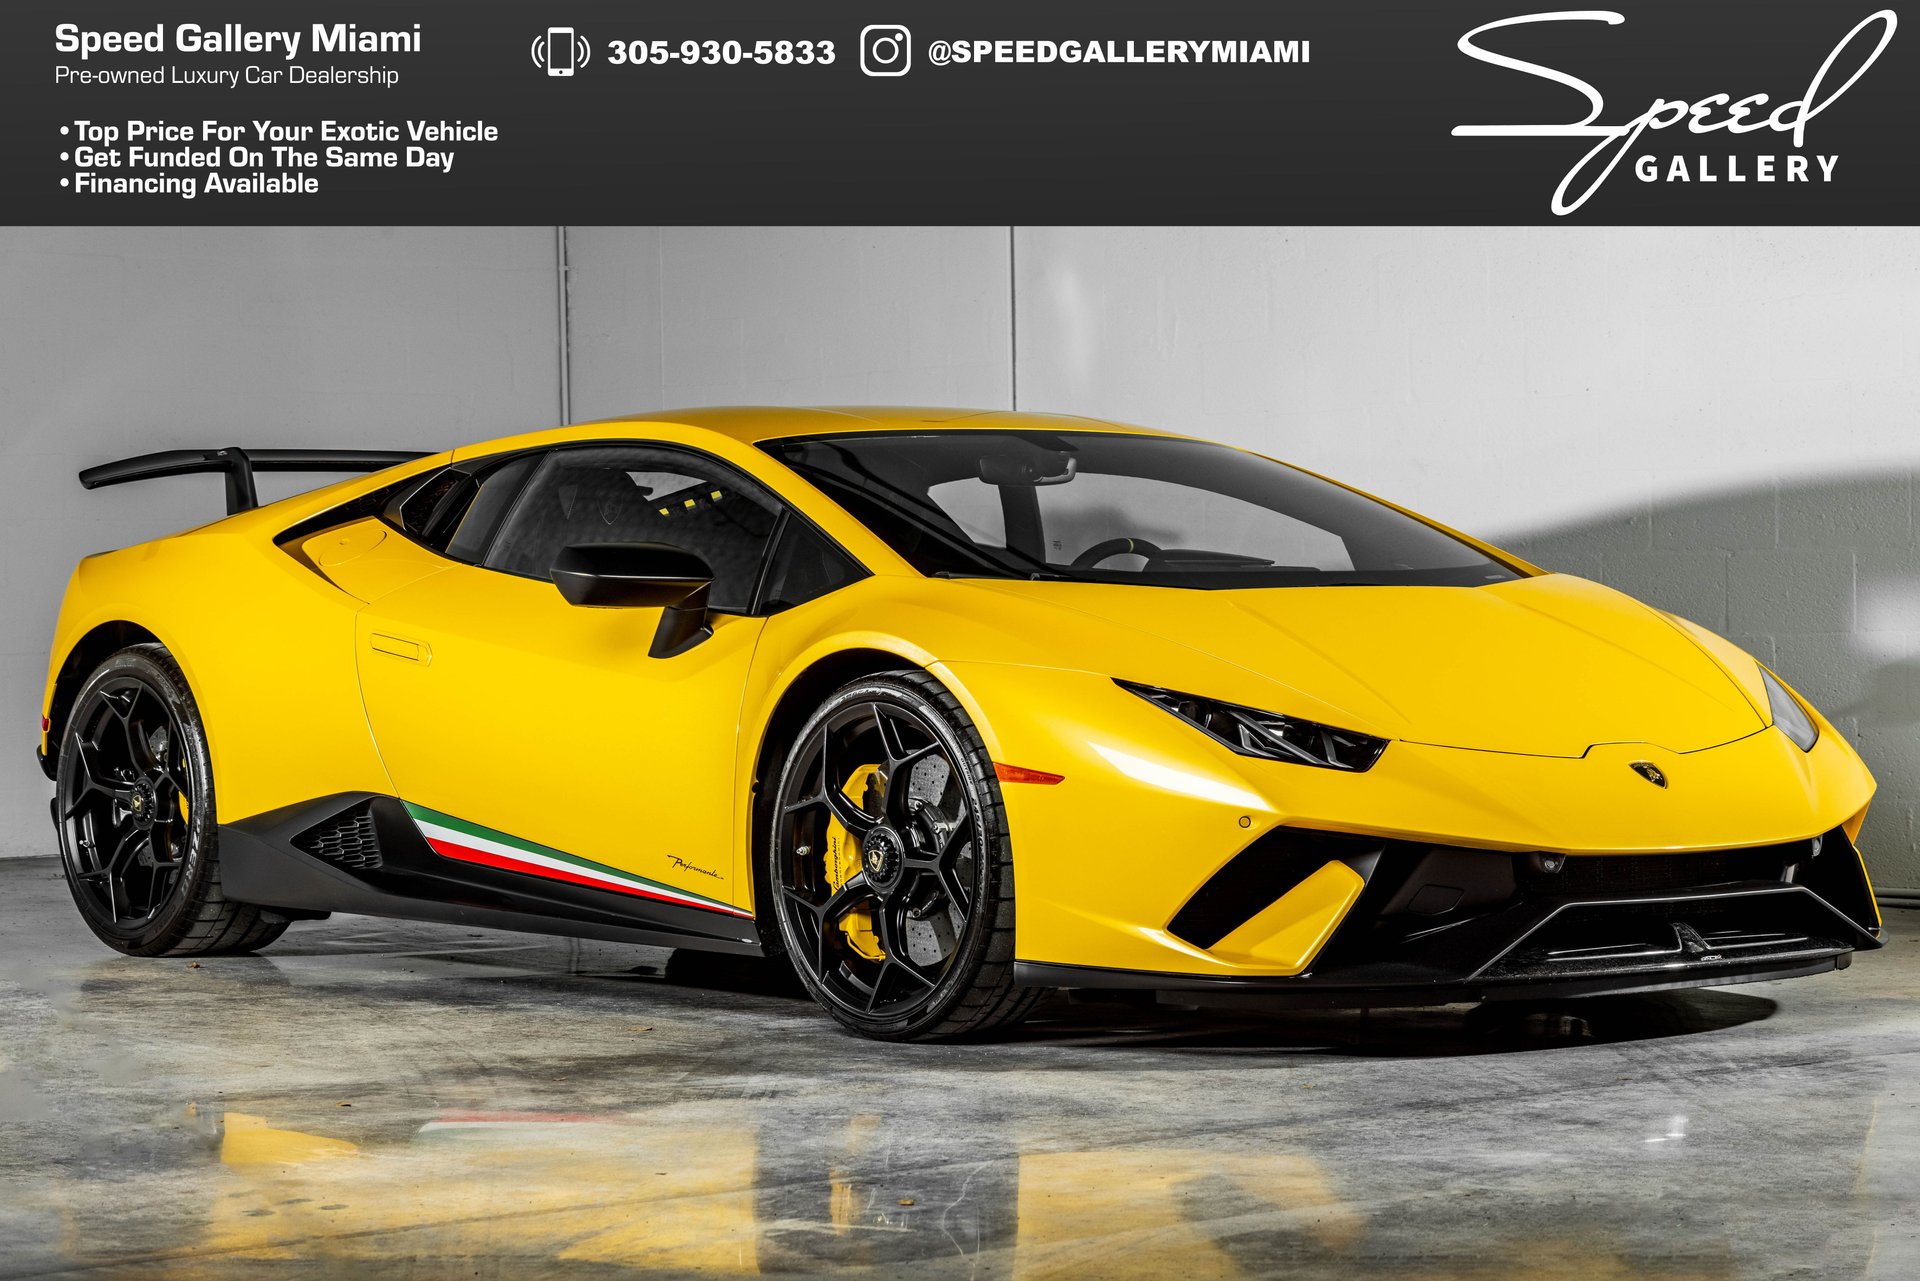 2018 Lamborghini Huracan Performante Coupe Speed Gallery Miami